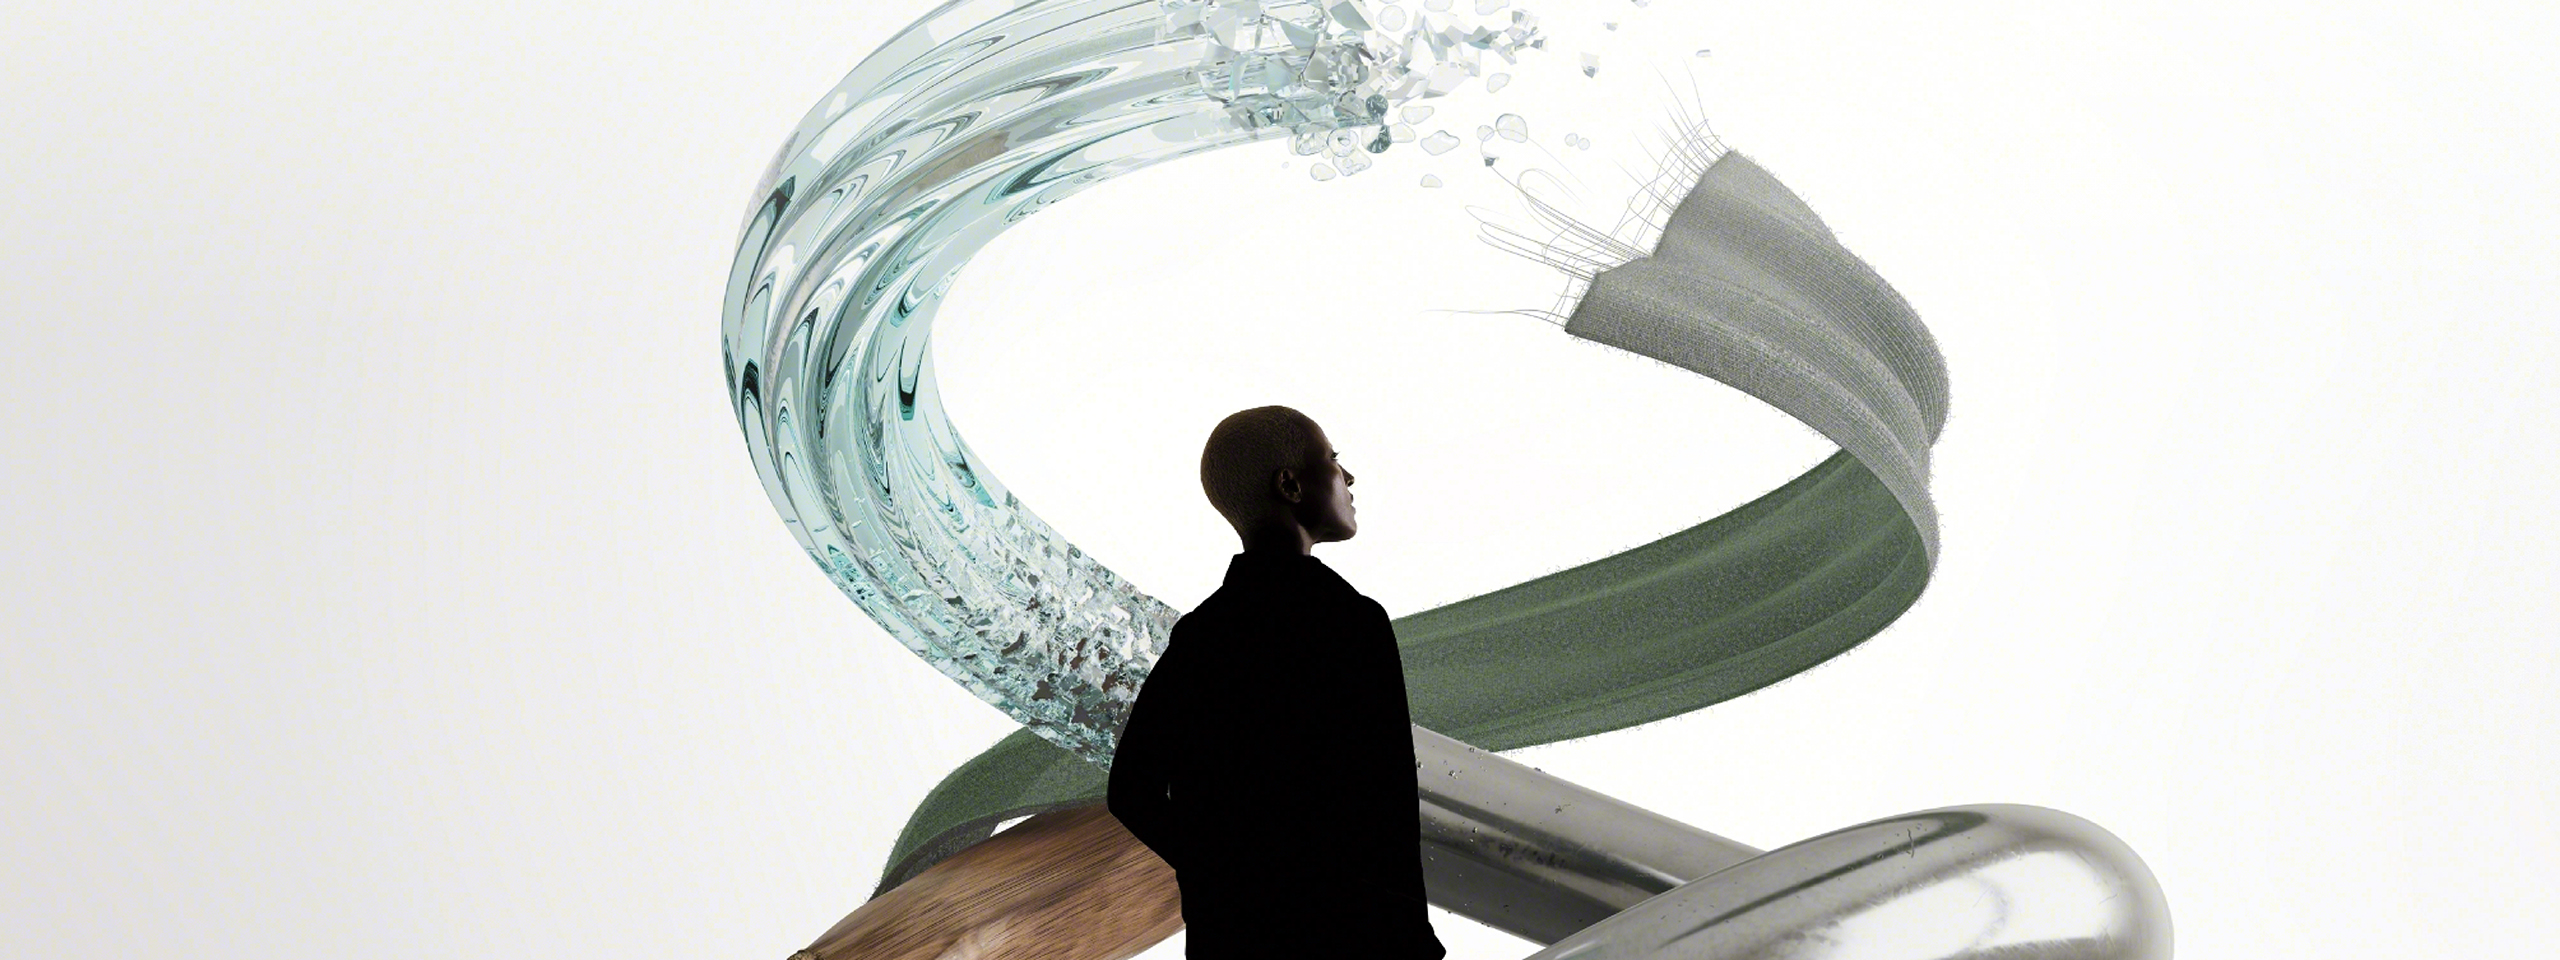 human standing inside swirls of water, fabric and wood